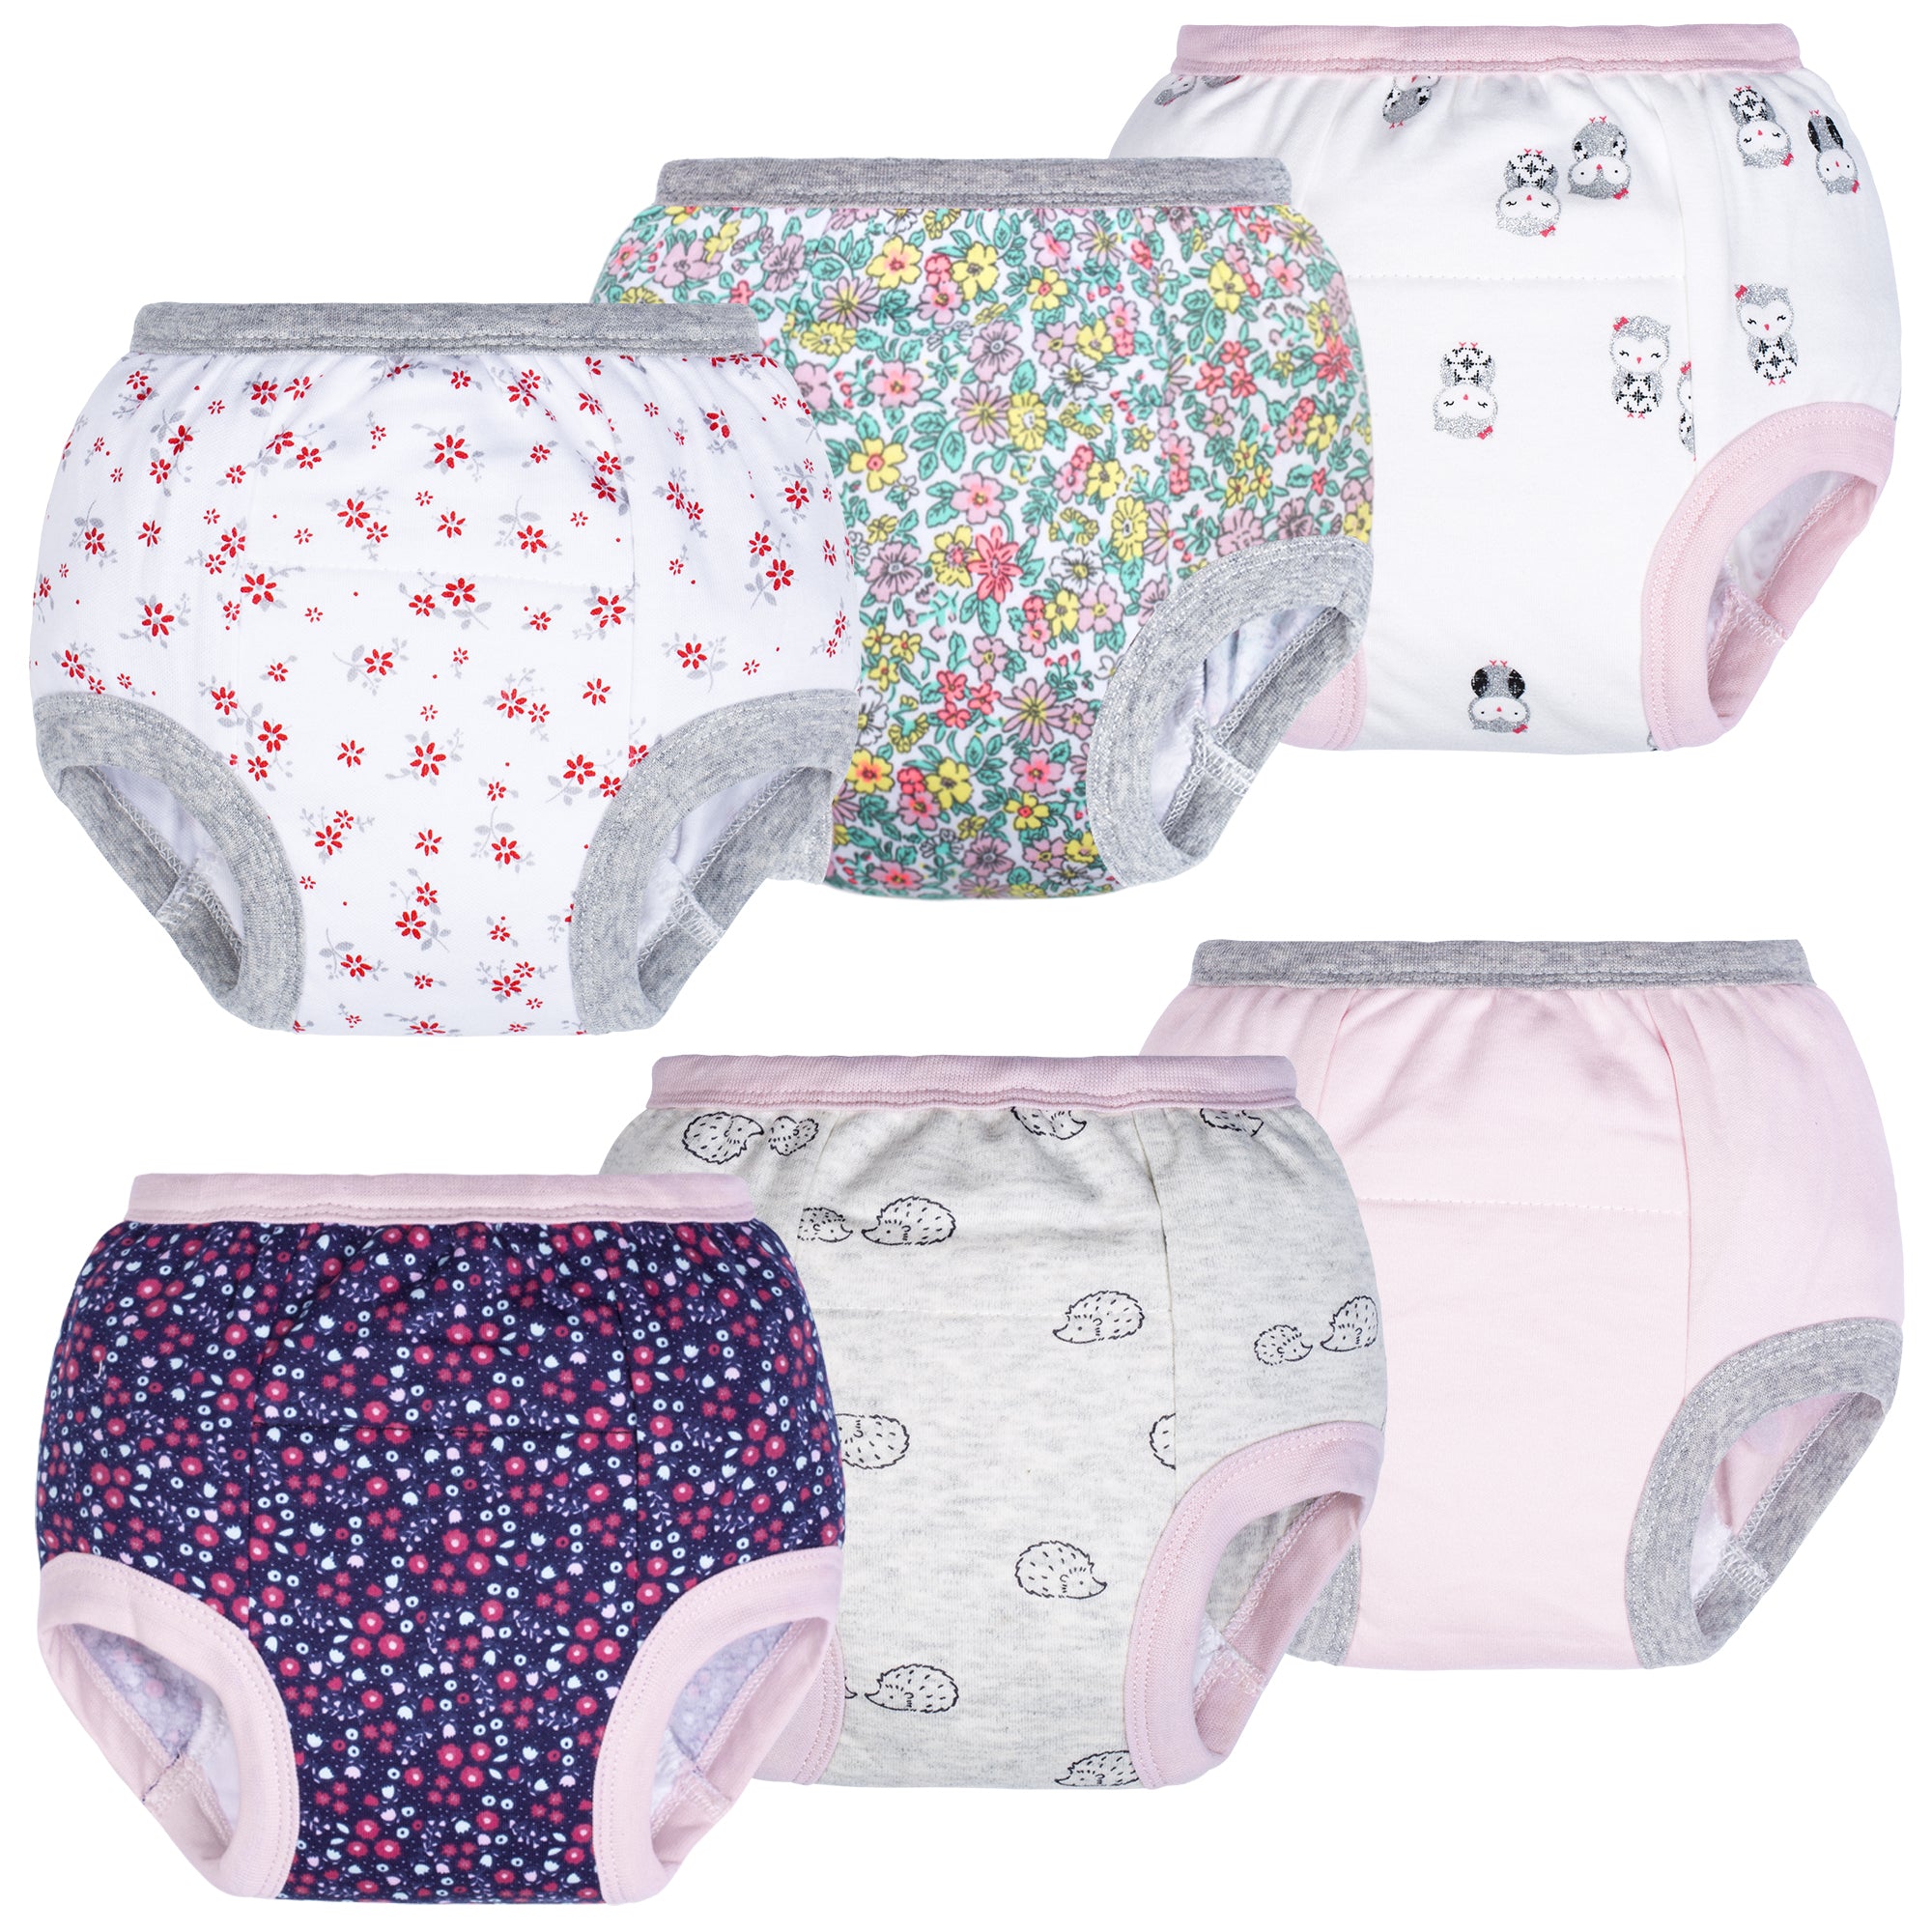 BIG ELEPHANT Baby Girls Training Pants, Toddler Potty Underwear, 3T 